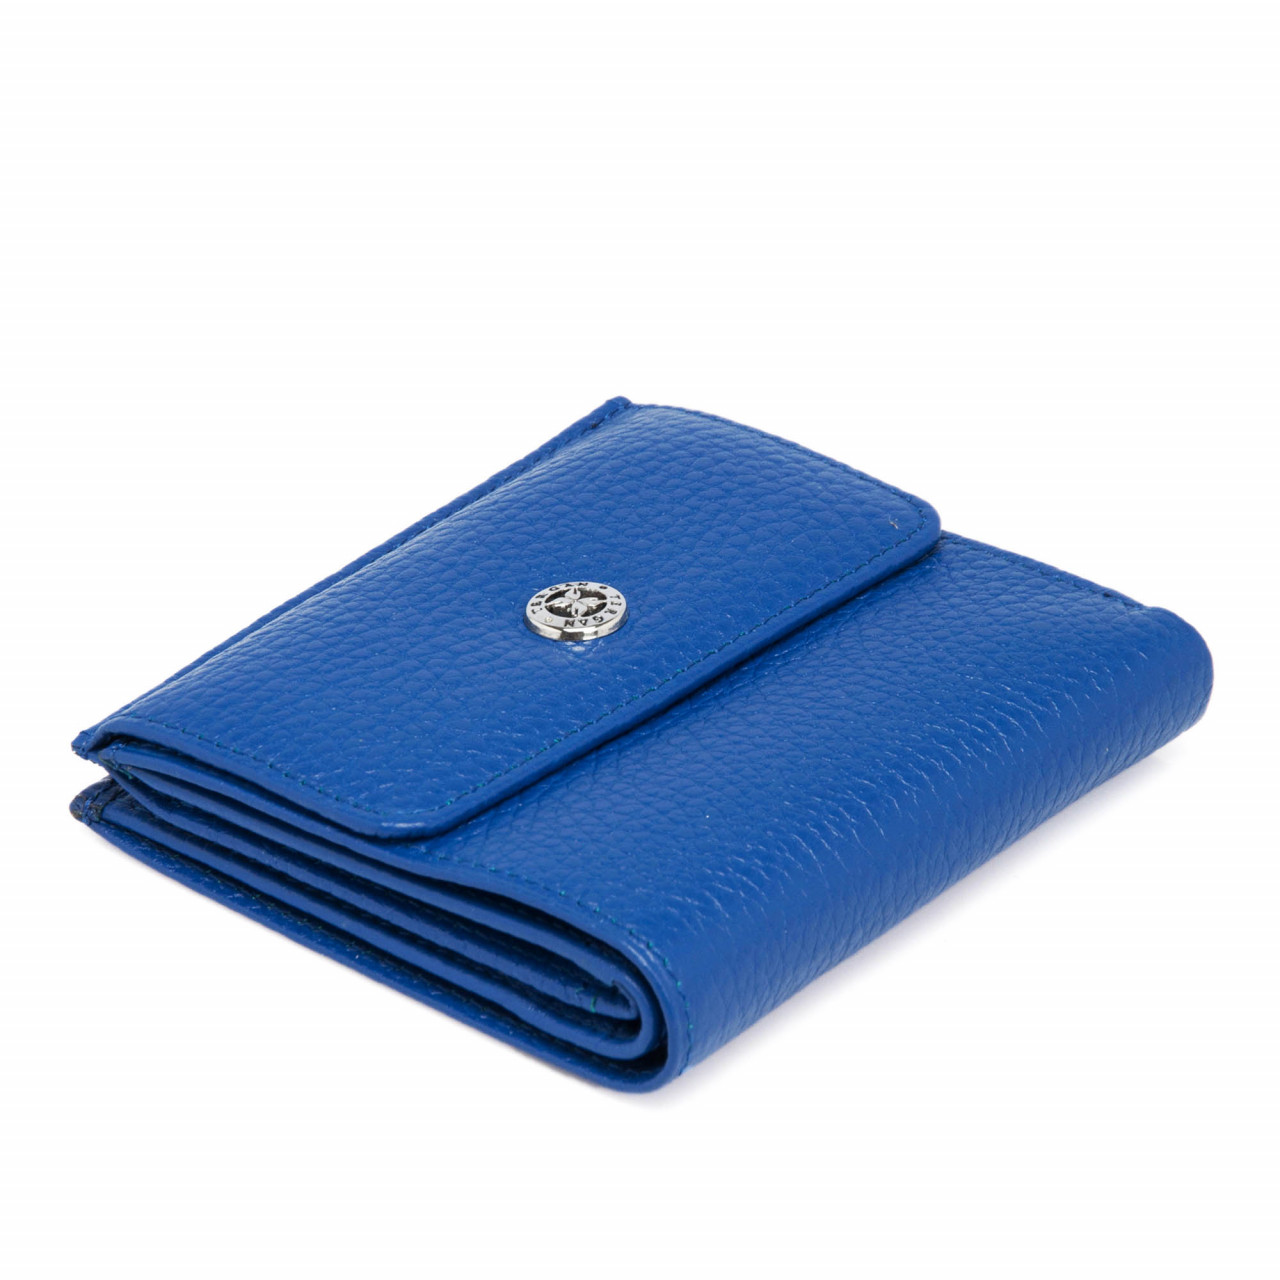 Mini Foldover Wallet in cobalt blue